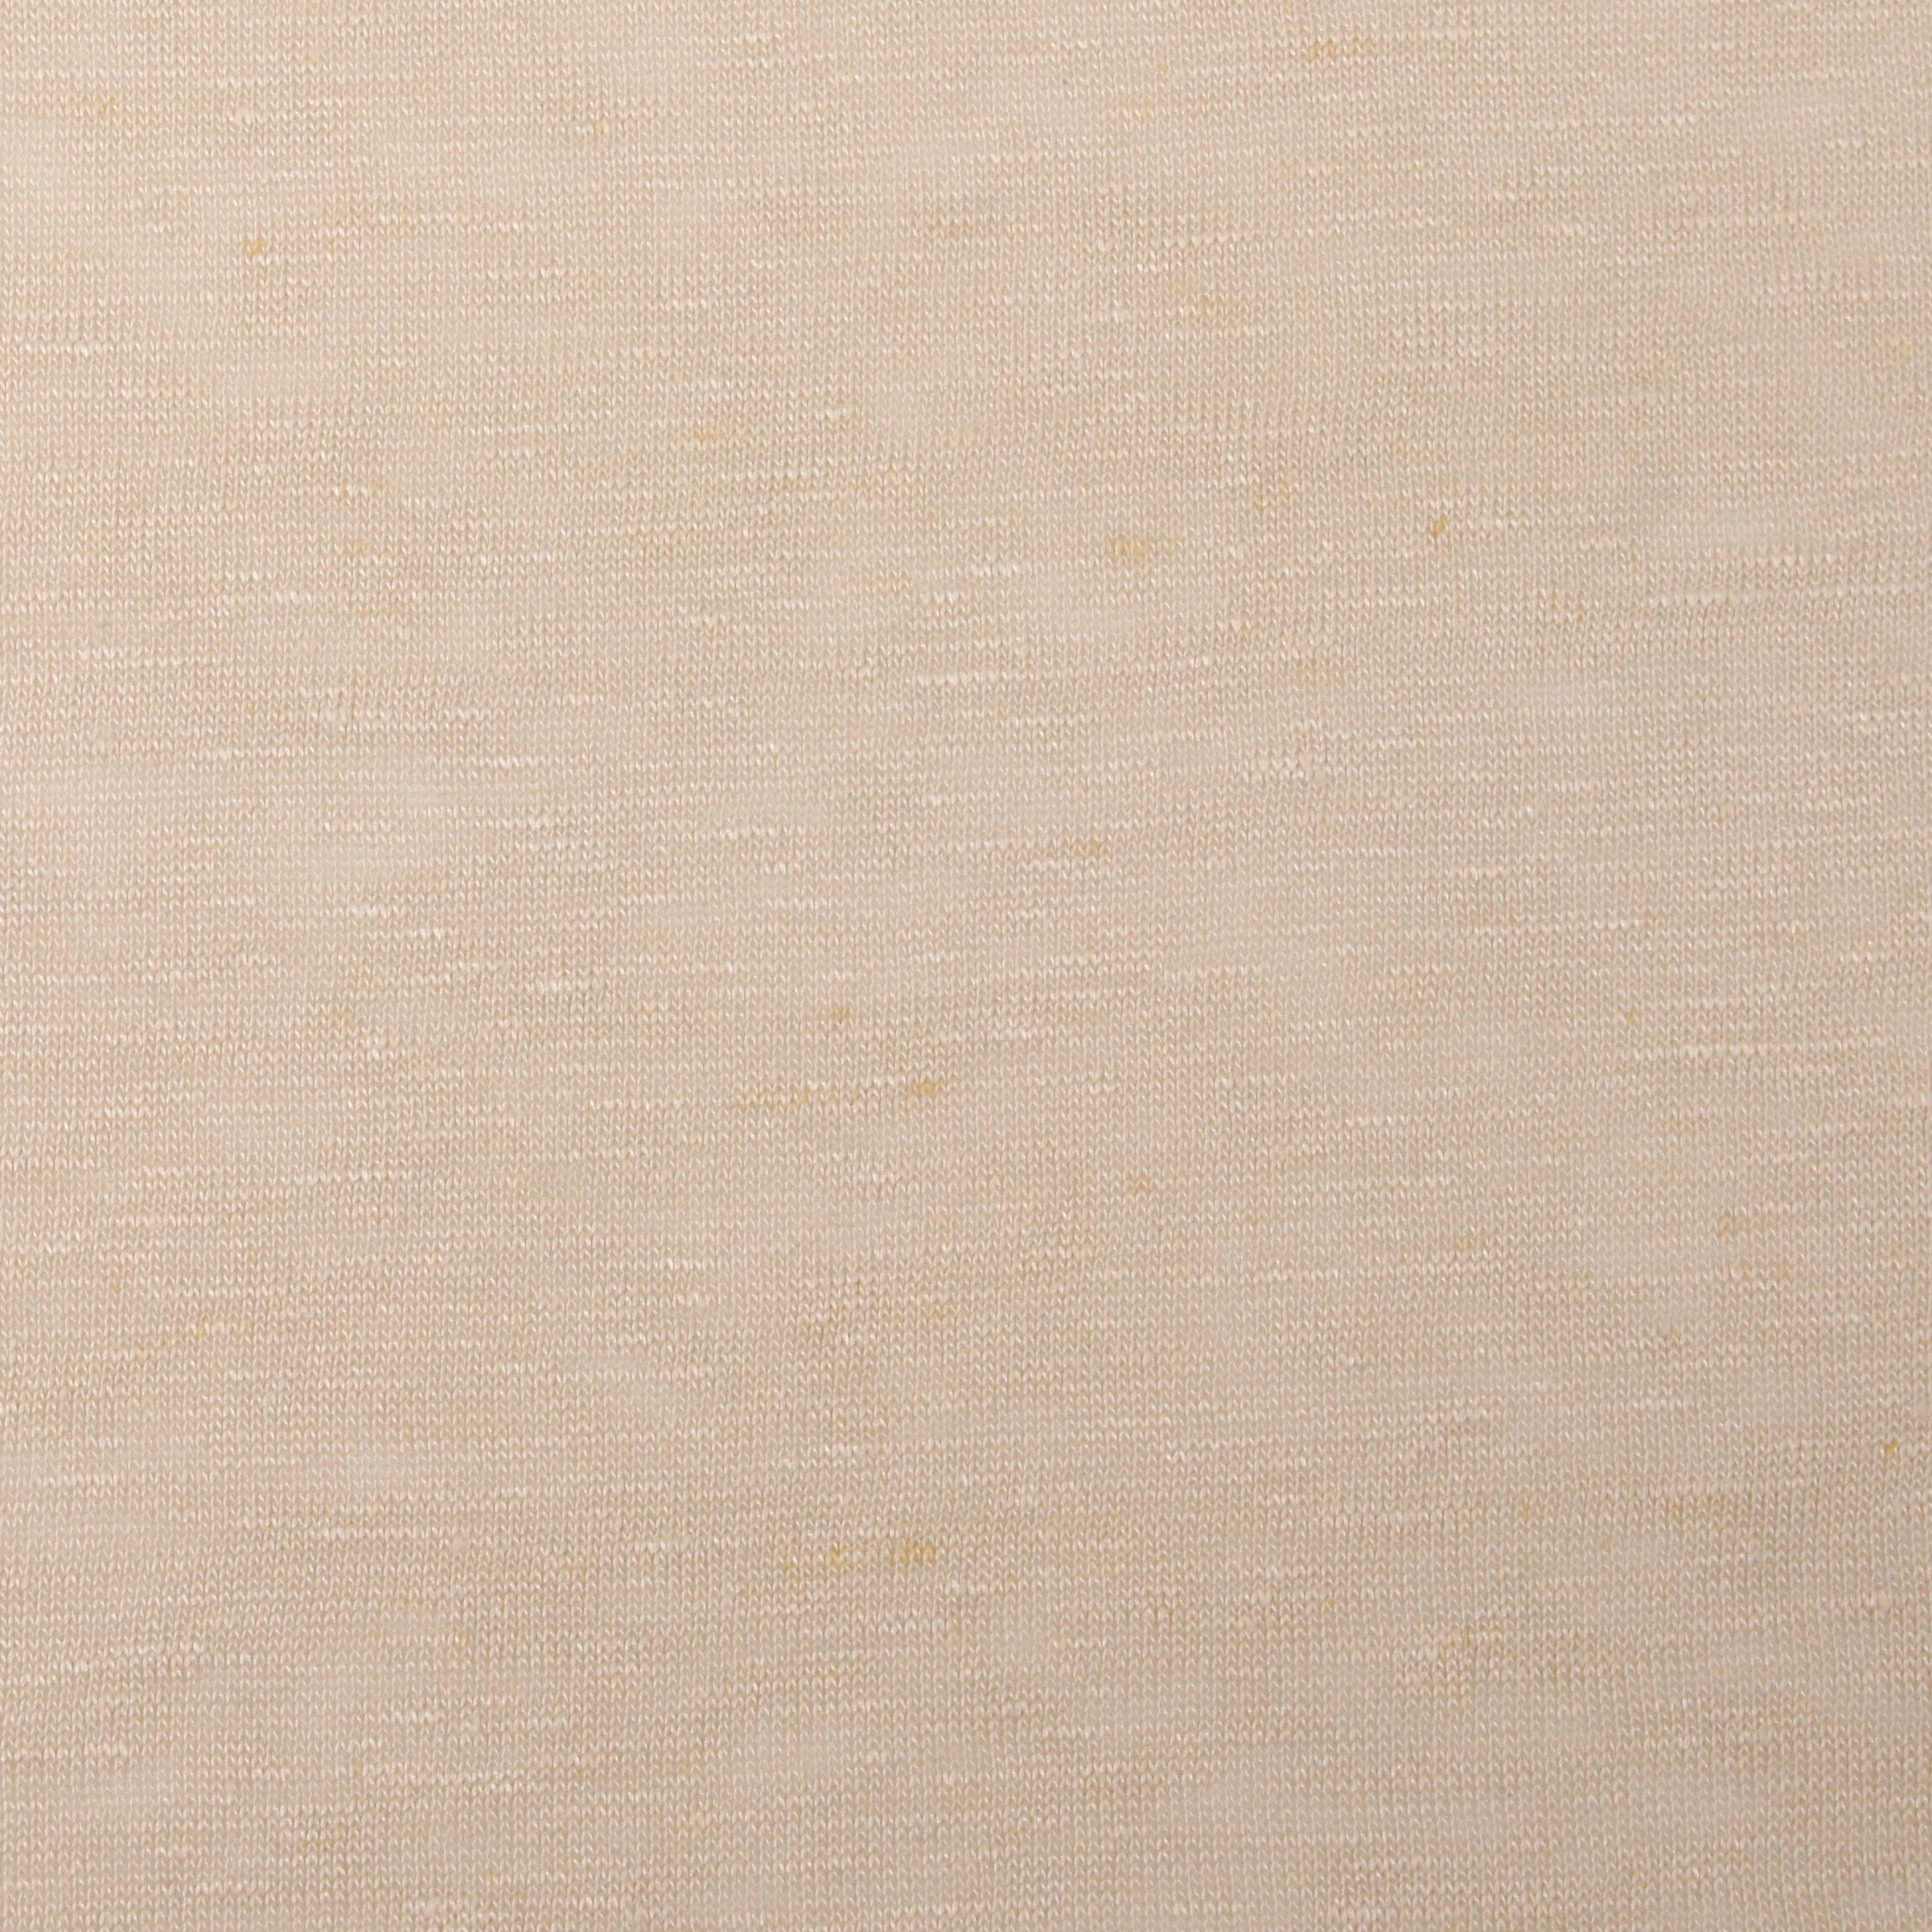 Japanese Linen Jersey - Beige